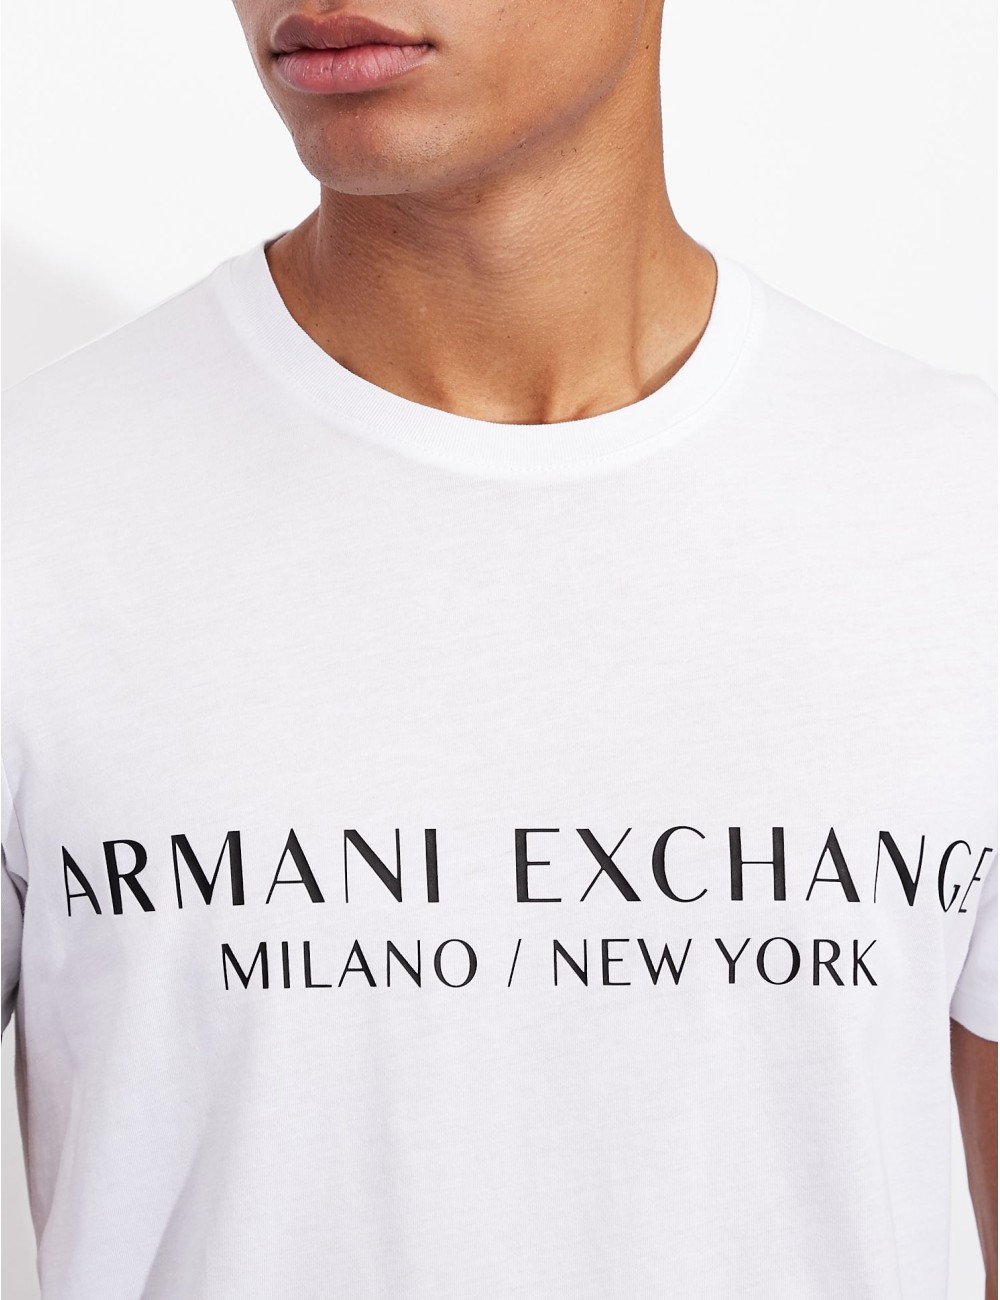 ARMANI EXCHANGE WHITE MEN'S T-SHIRT